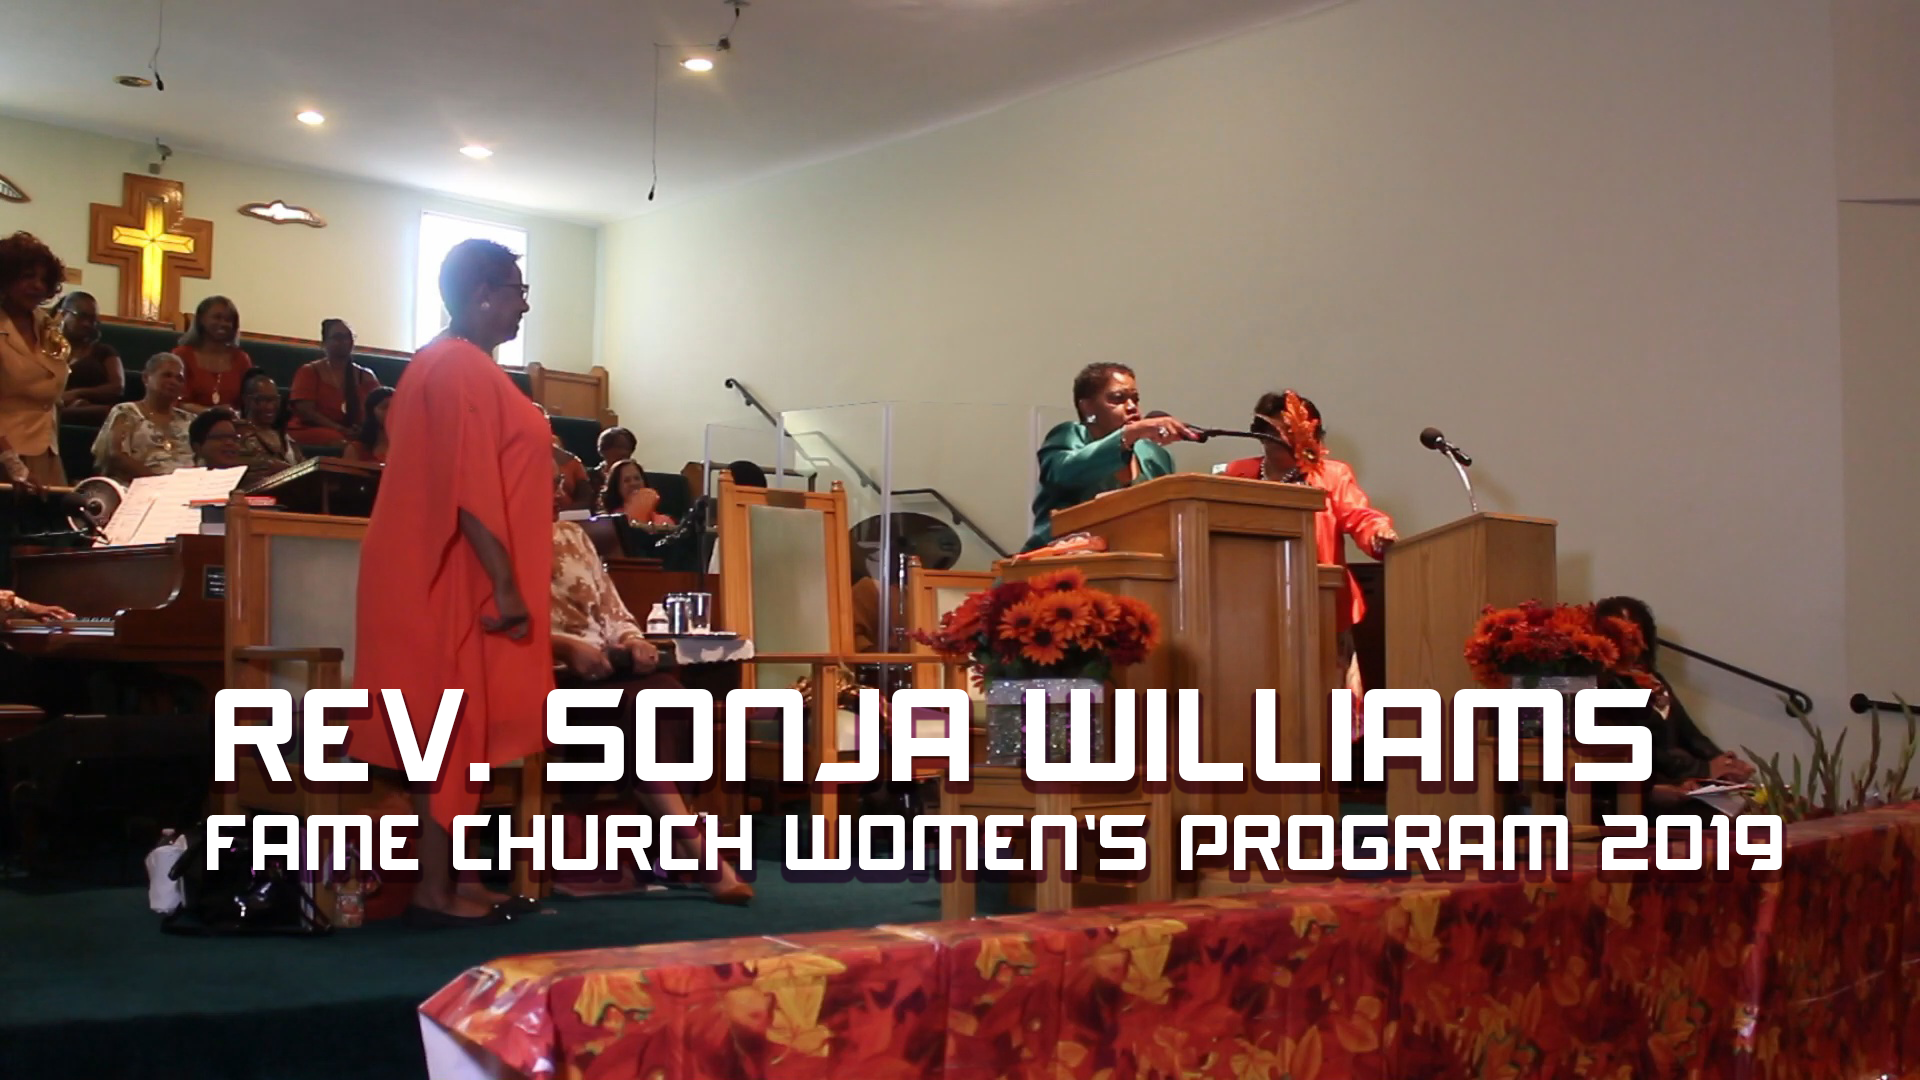 Rev. Sonja Williams at FAME Church Women’s Program 2019